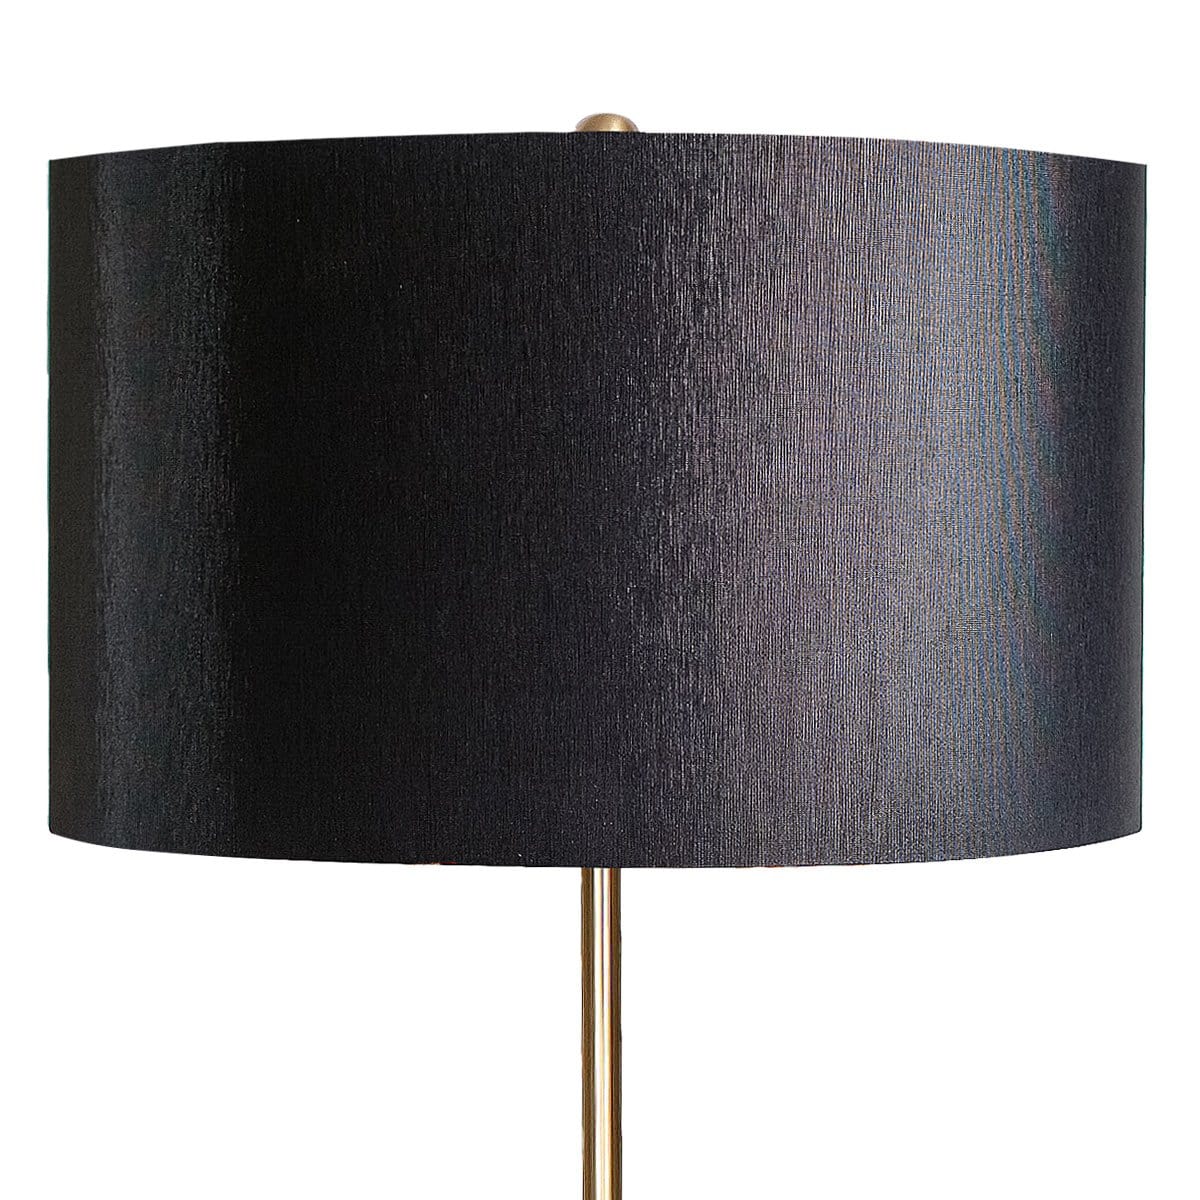 Metal Floor Lamp in Brushed Brass Finish Black Linen Shade